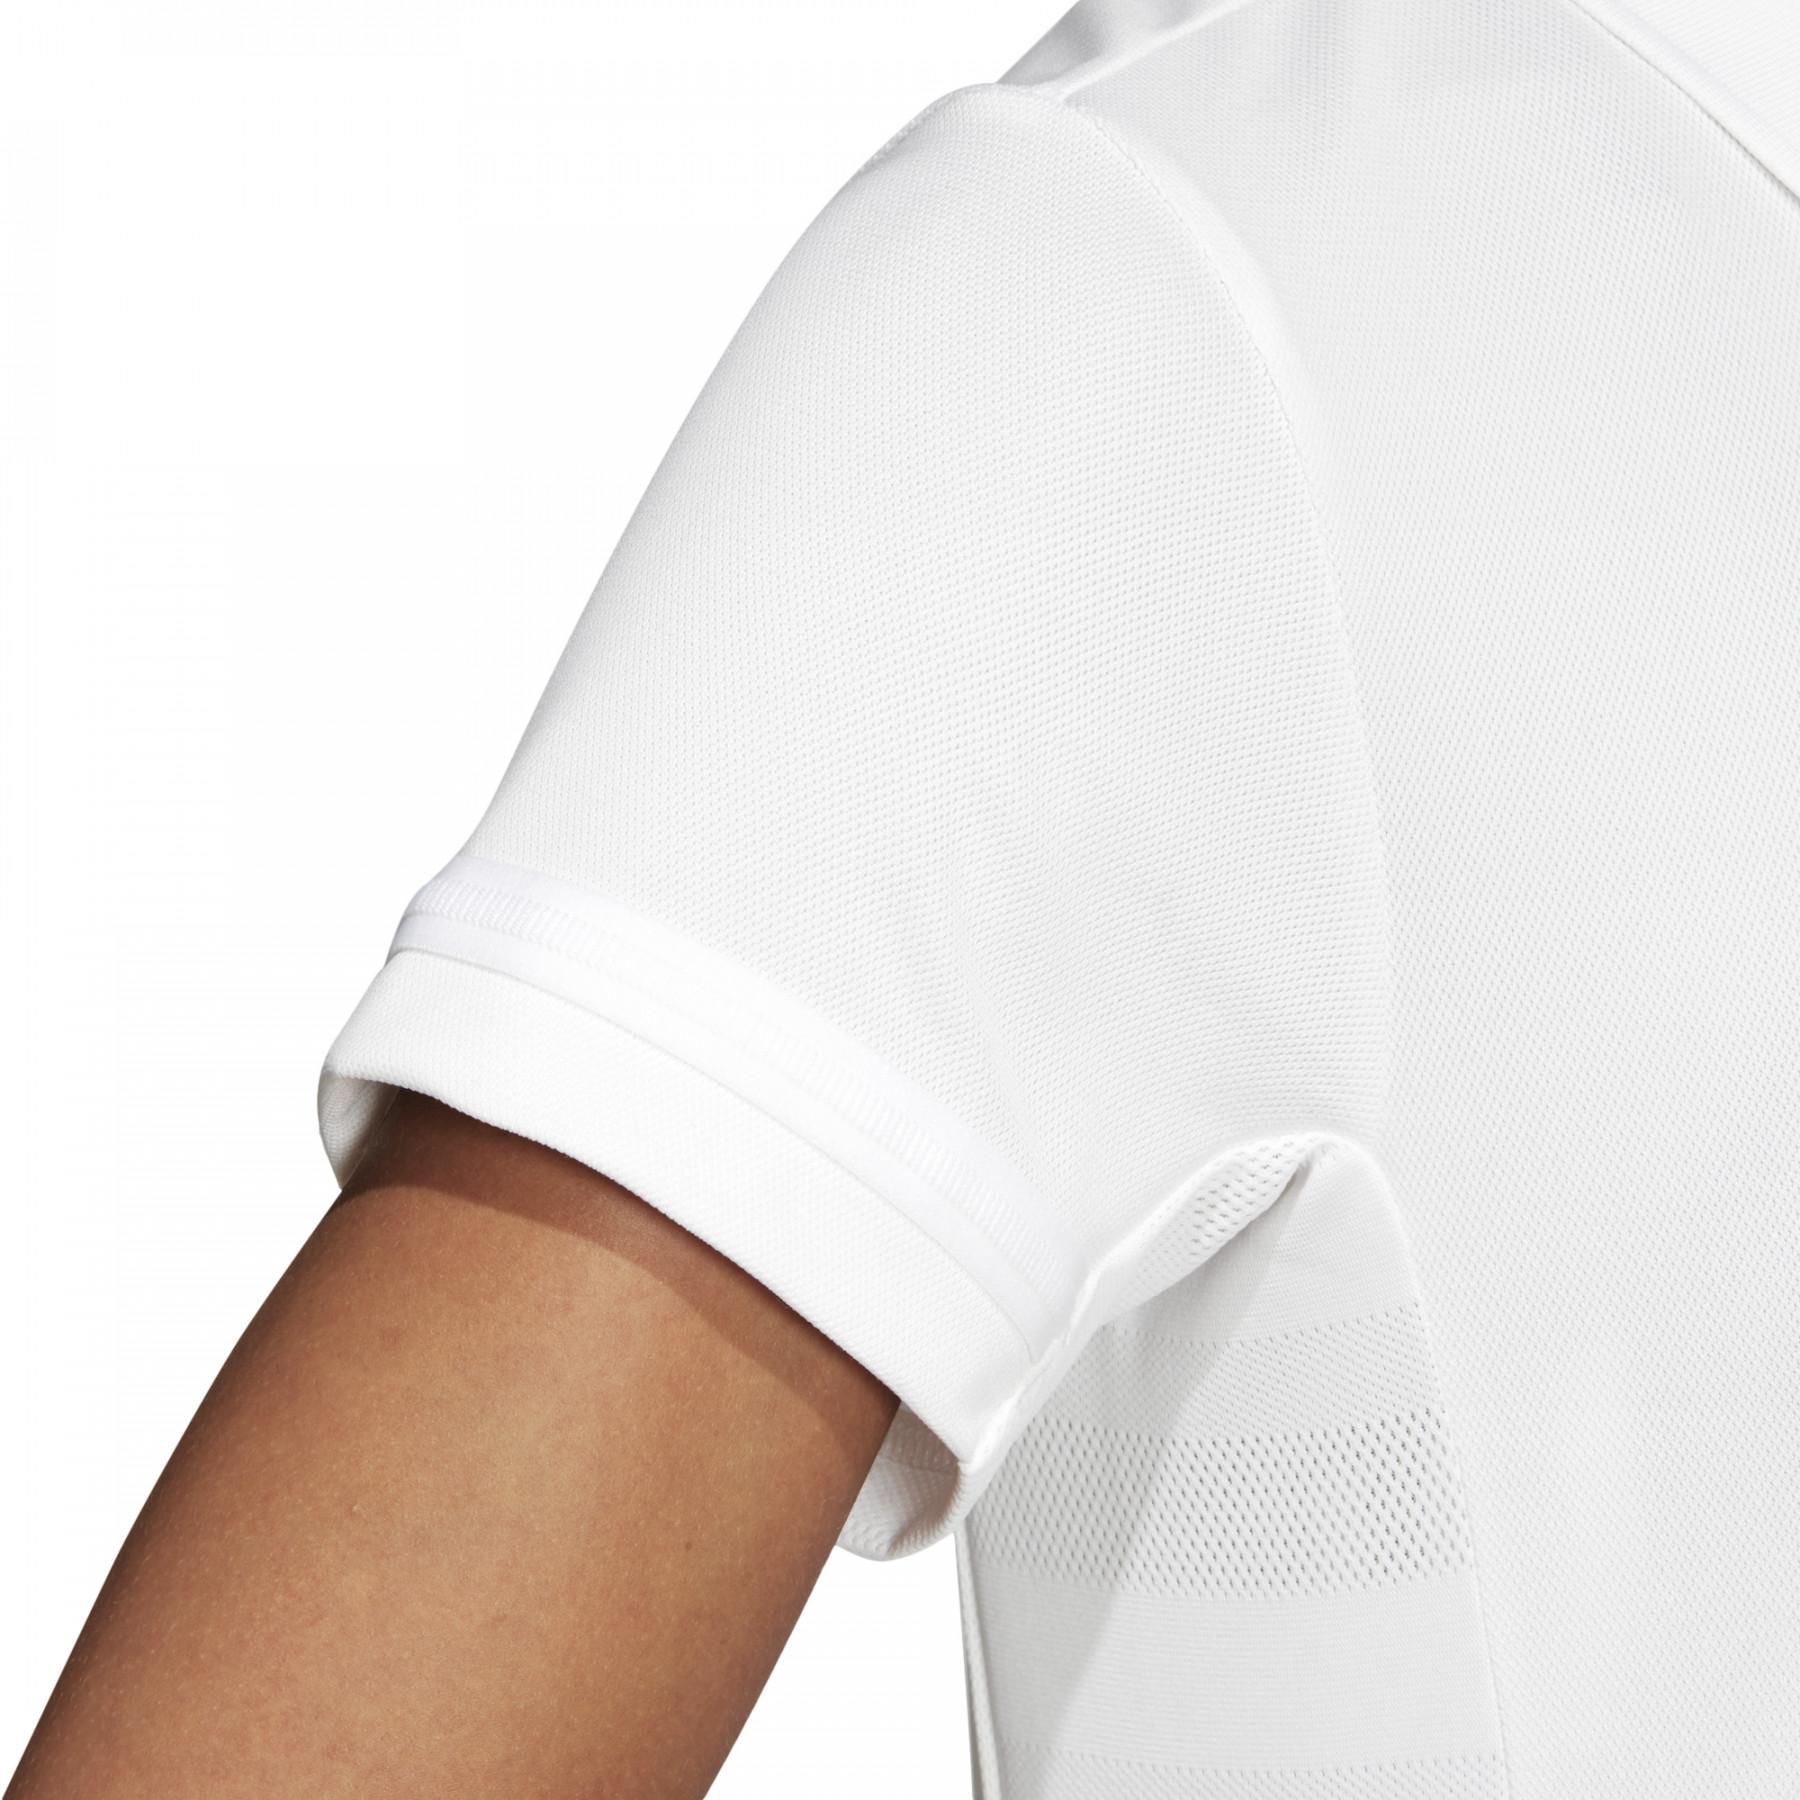 Camisa pólo feminina adidas Team 19